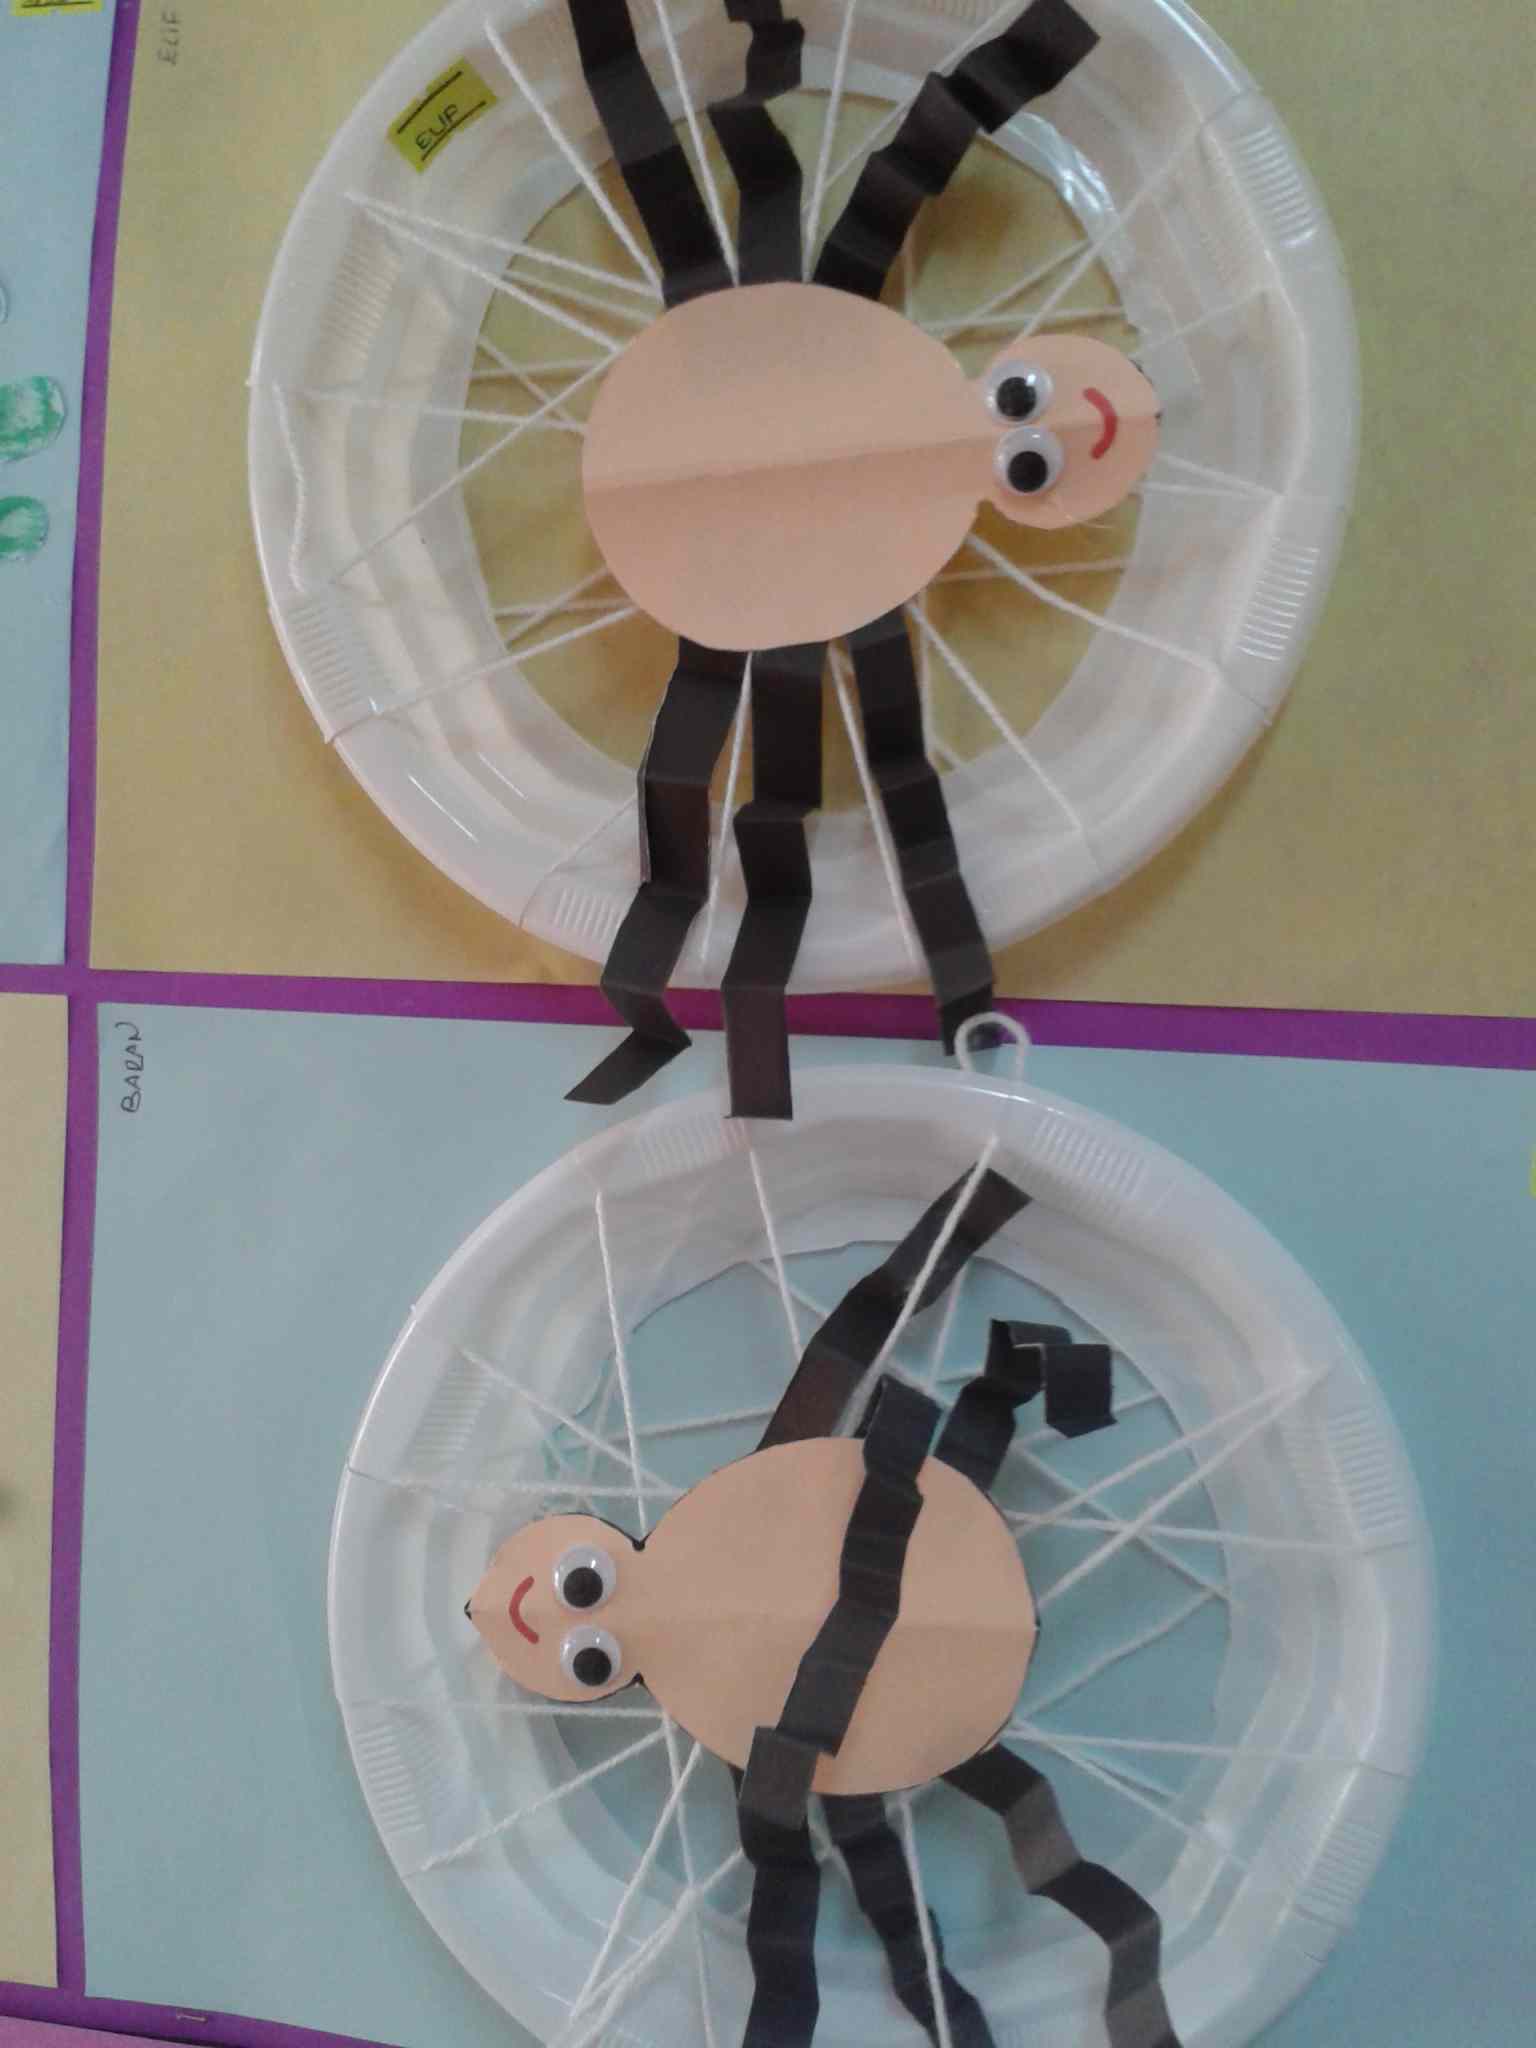 paper spider craft plate idea worksheets comment preschool preschoolplanet crafts